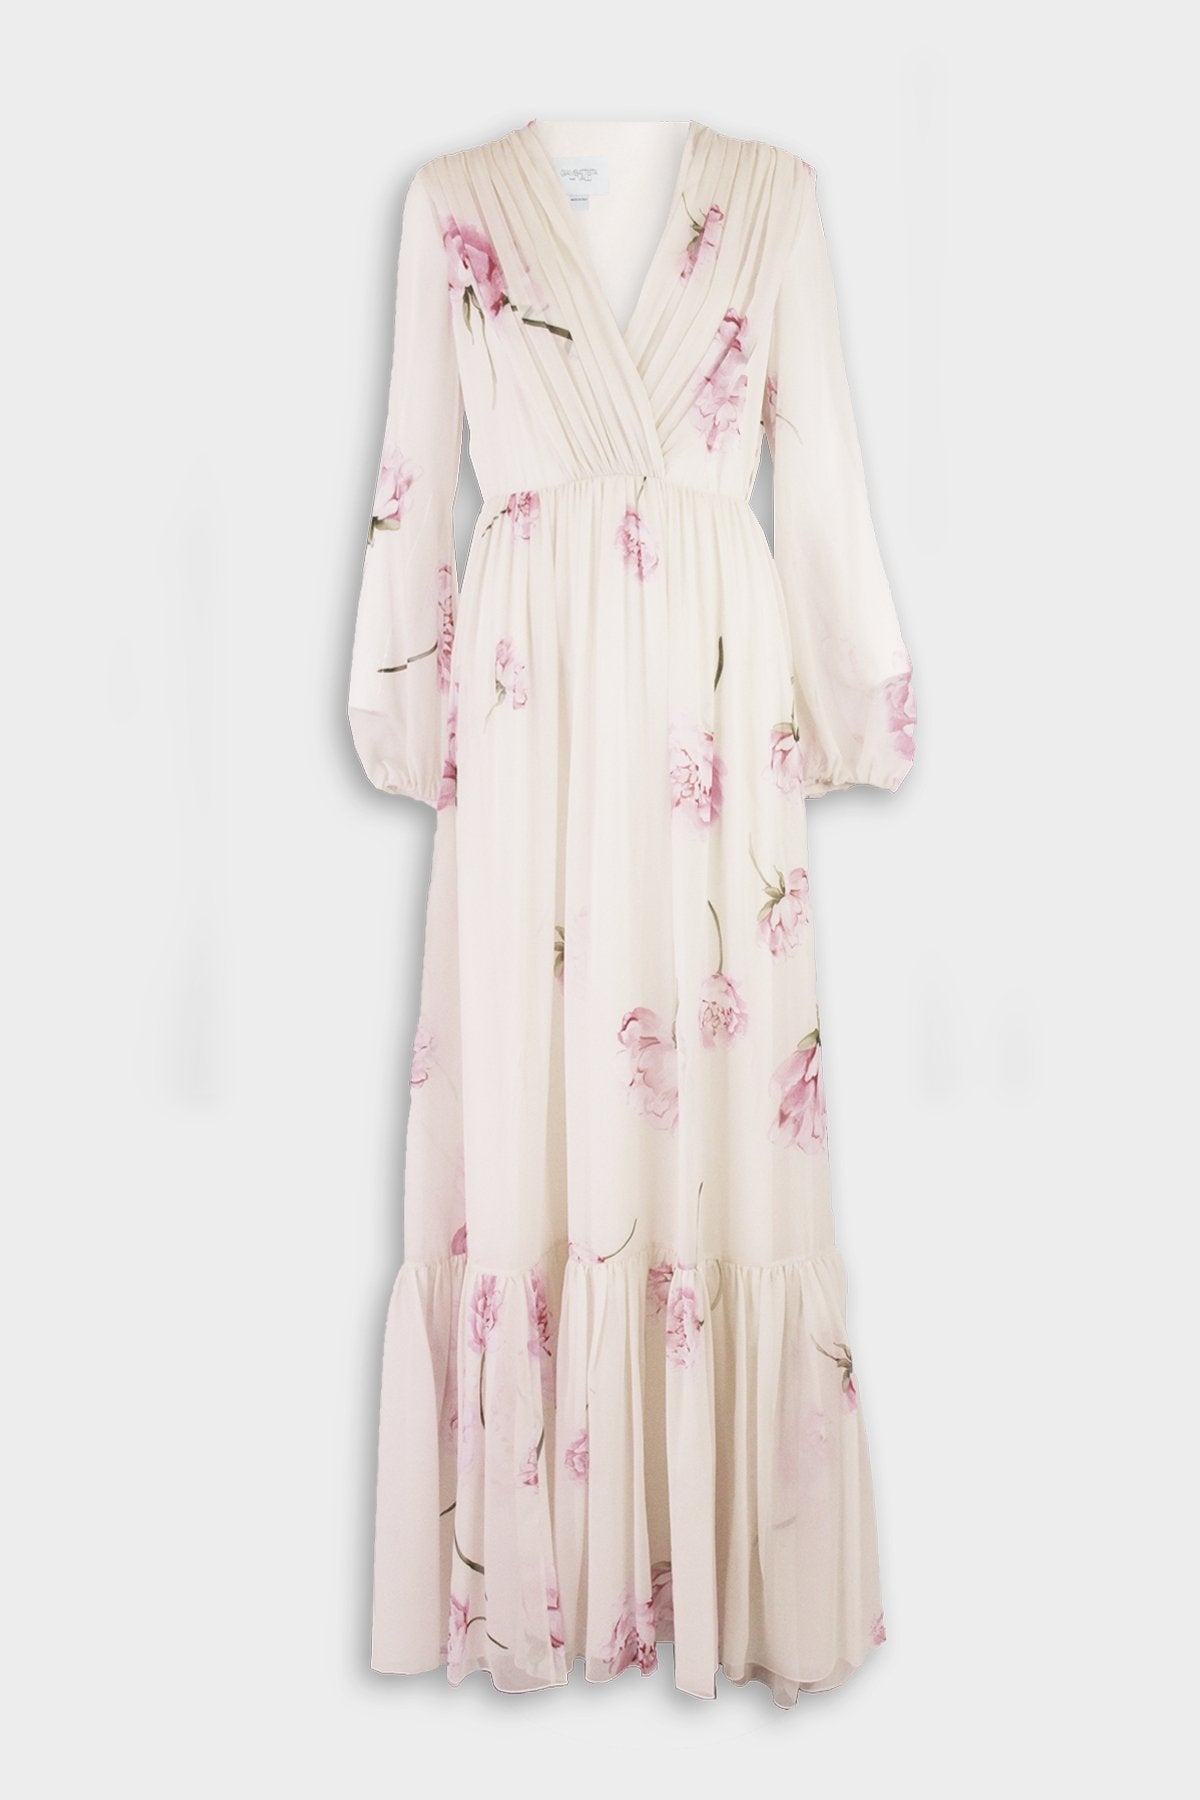 Long Dress in Ivory/Rose print - shop-olivia.com